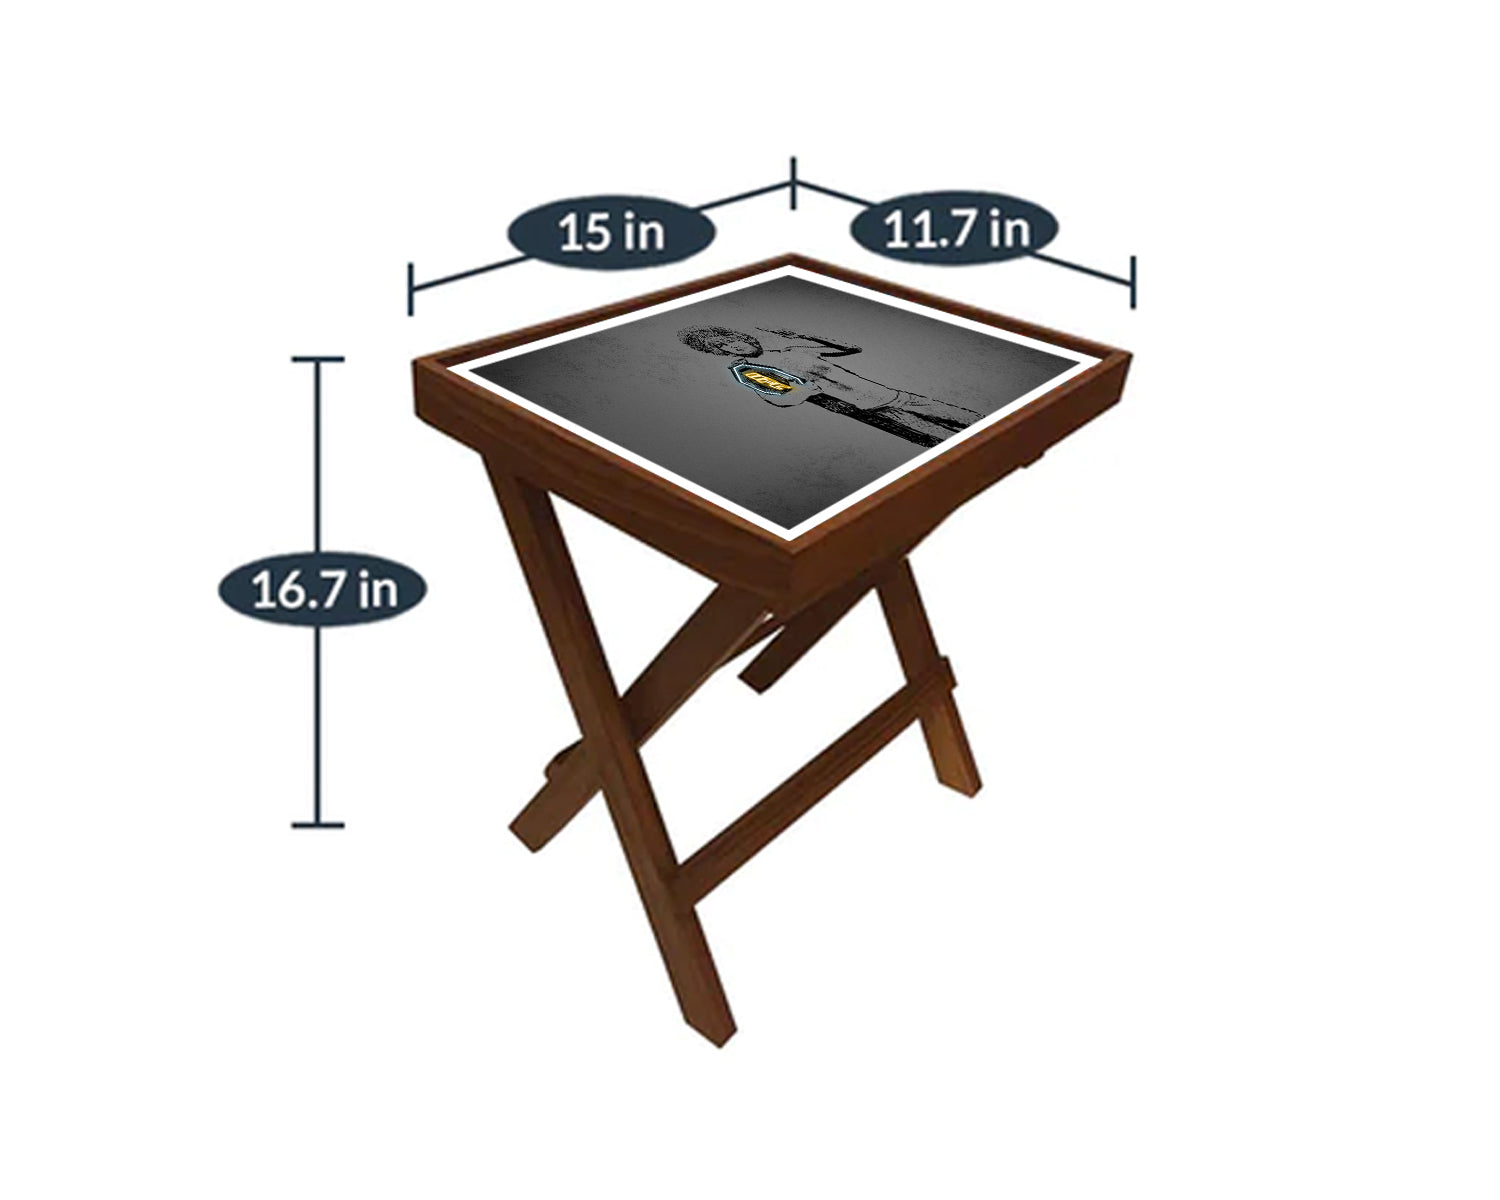 Khabib Nurmagomedov Neon Effect Coffee and Laptop Table 